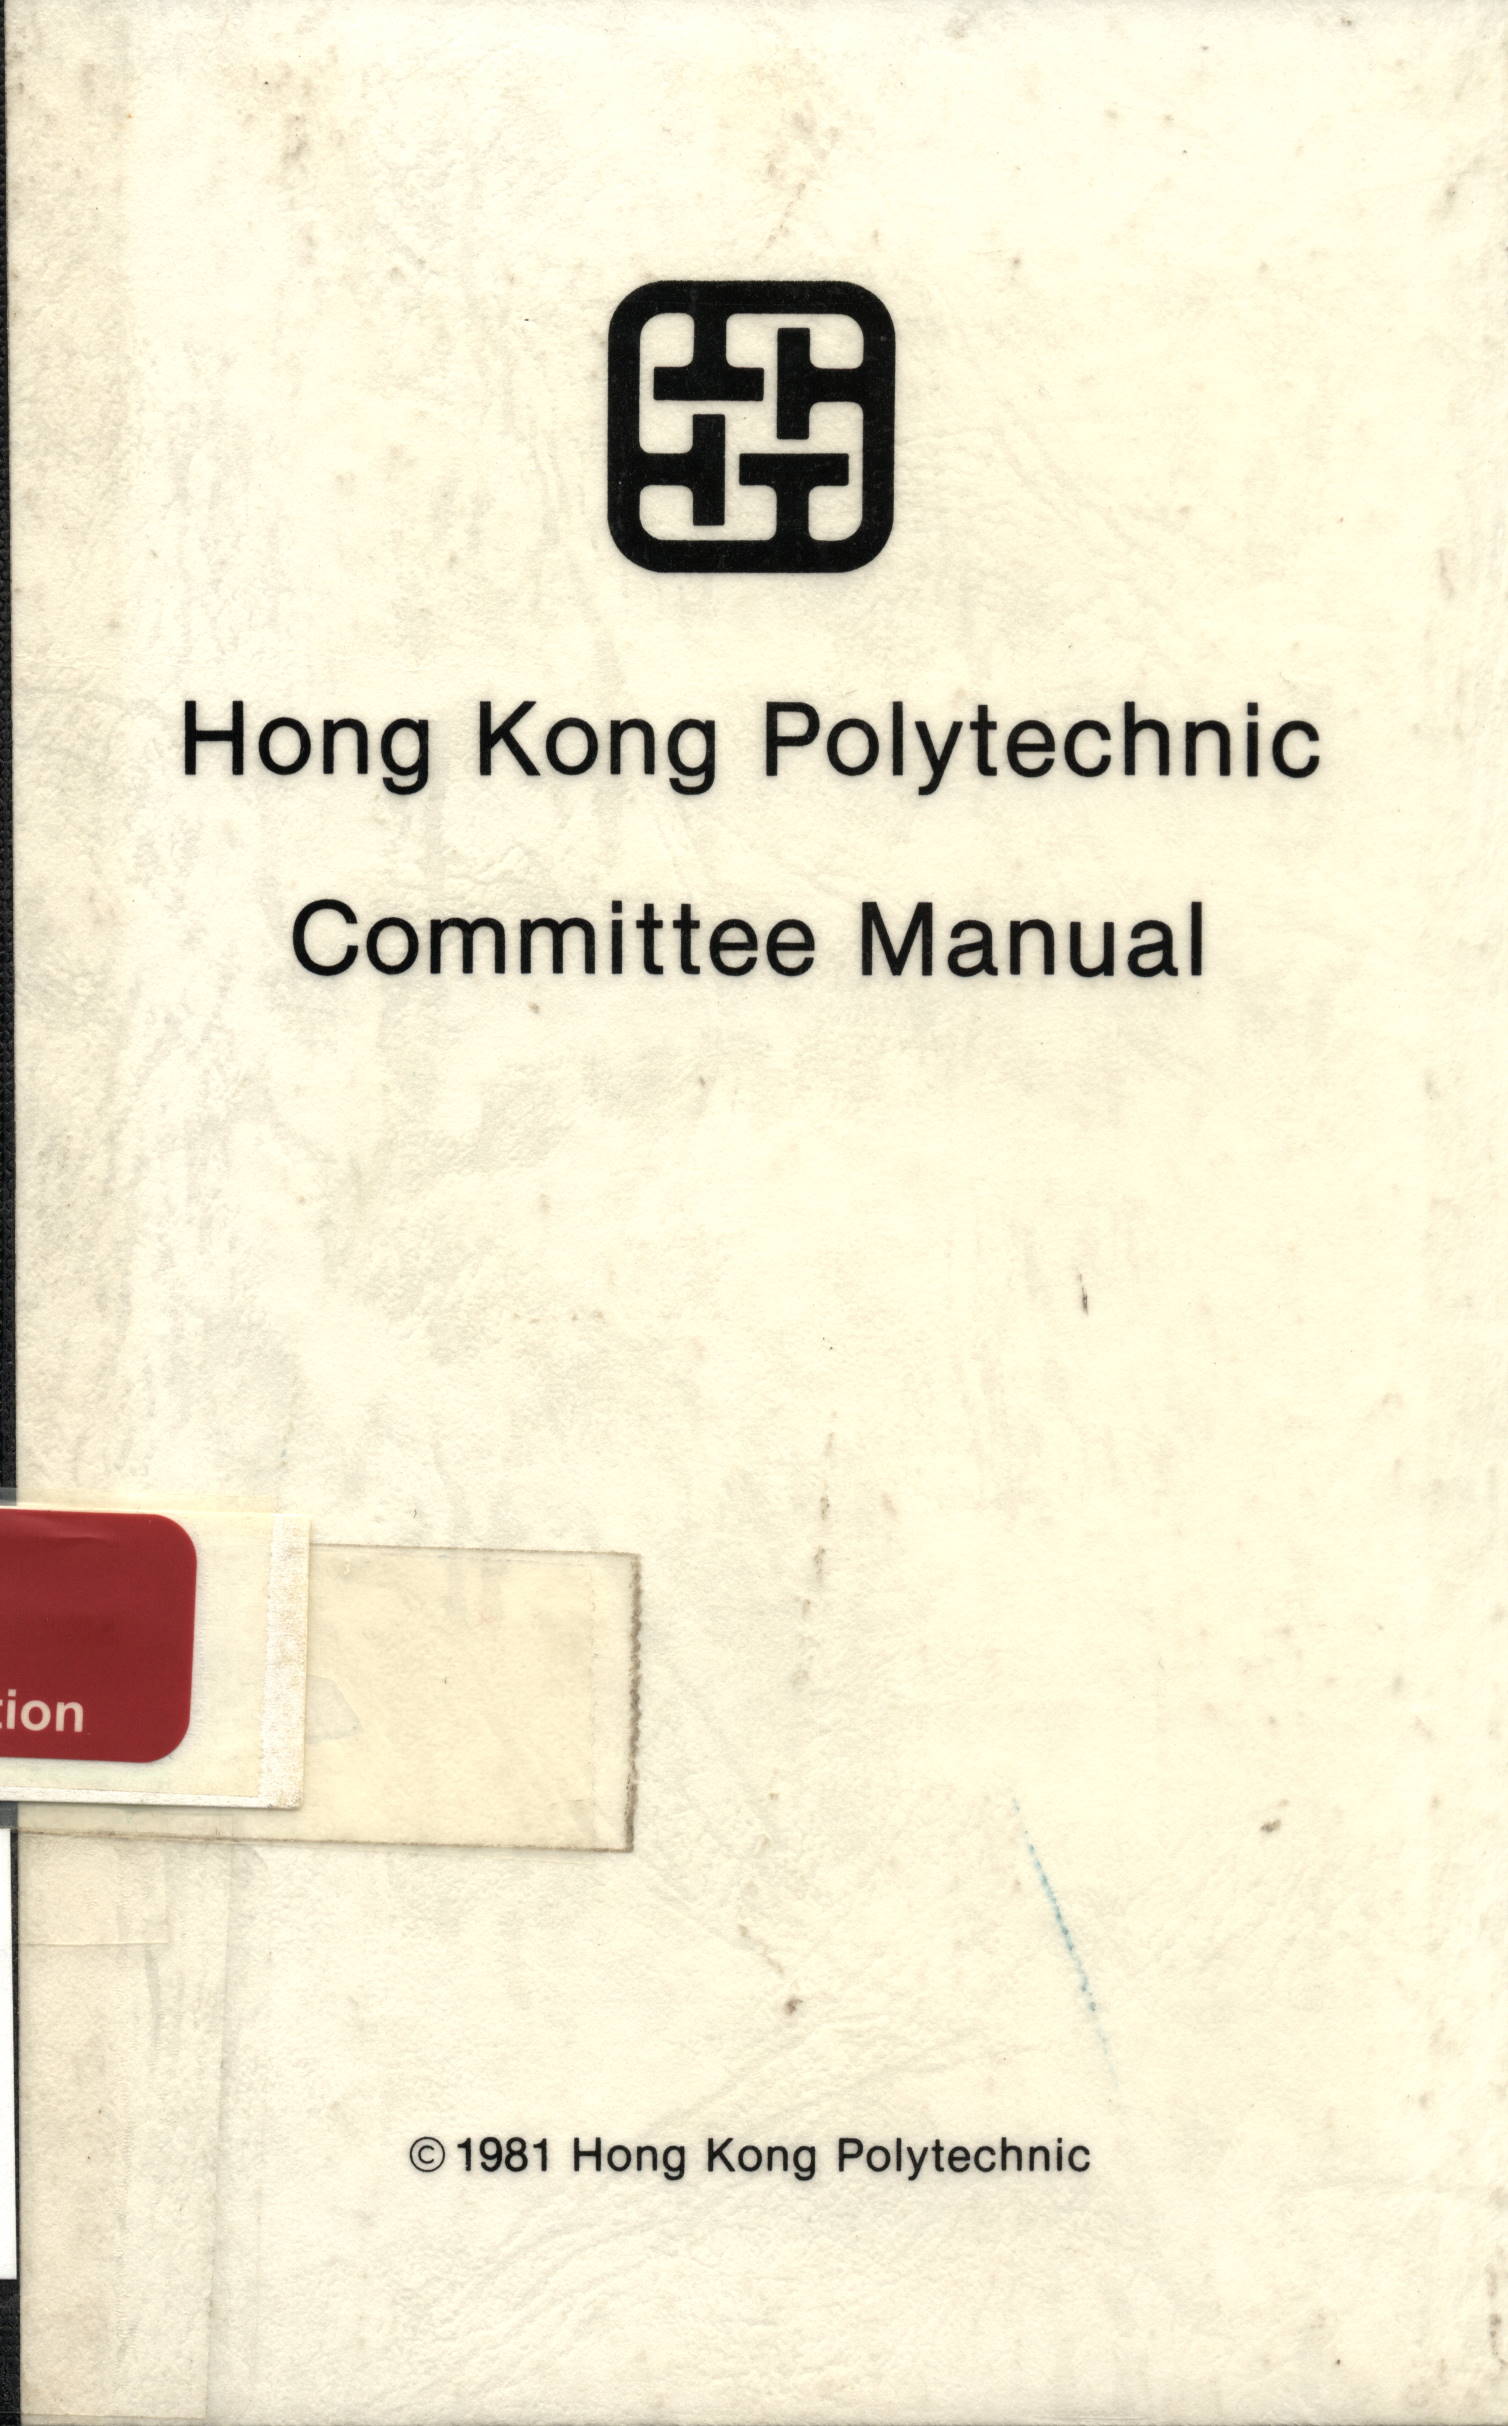 Hong Kong Polytechnic committee manual